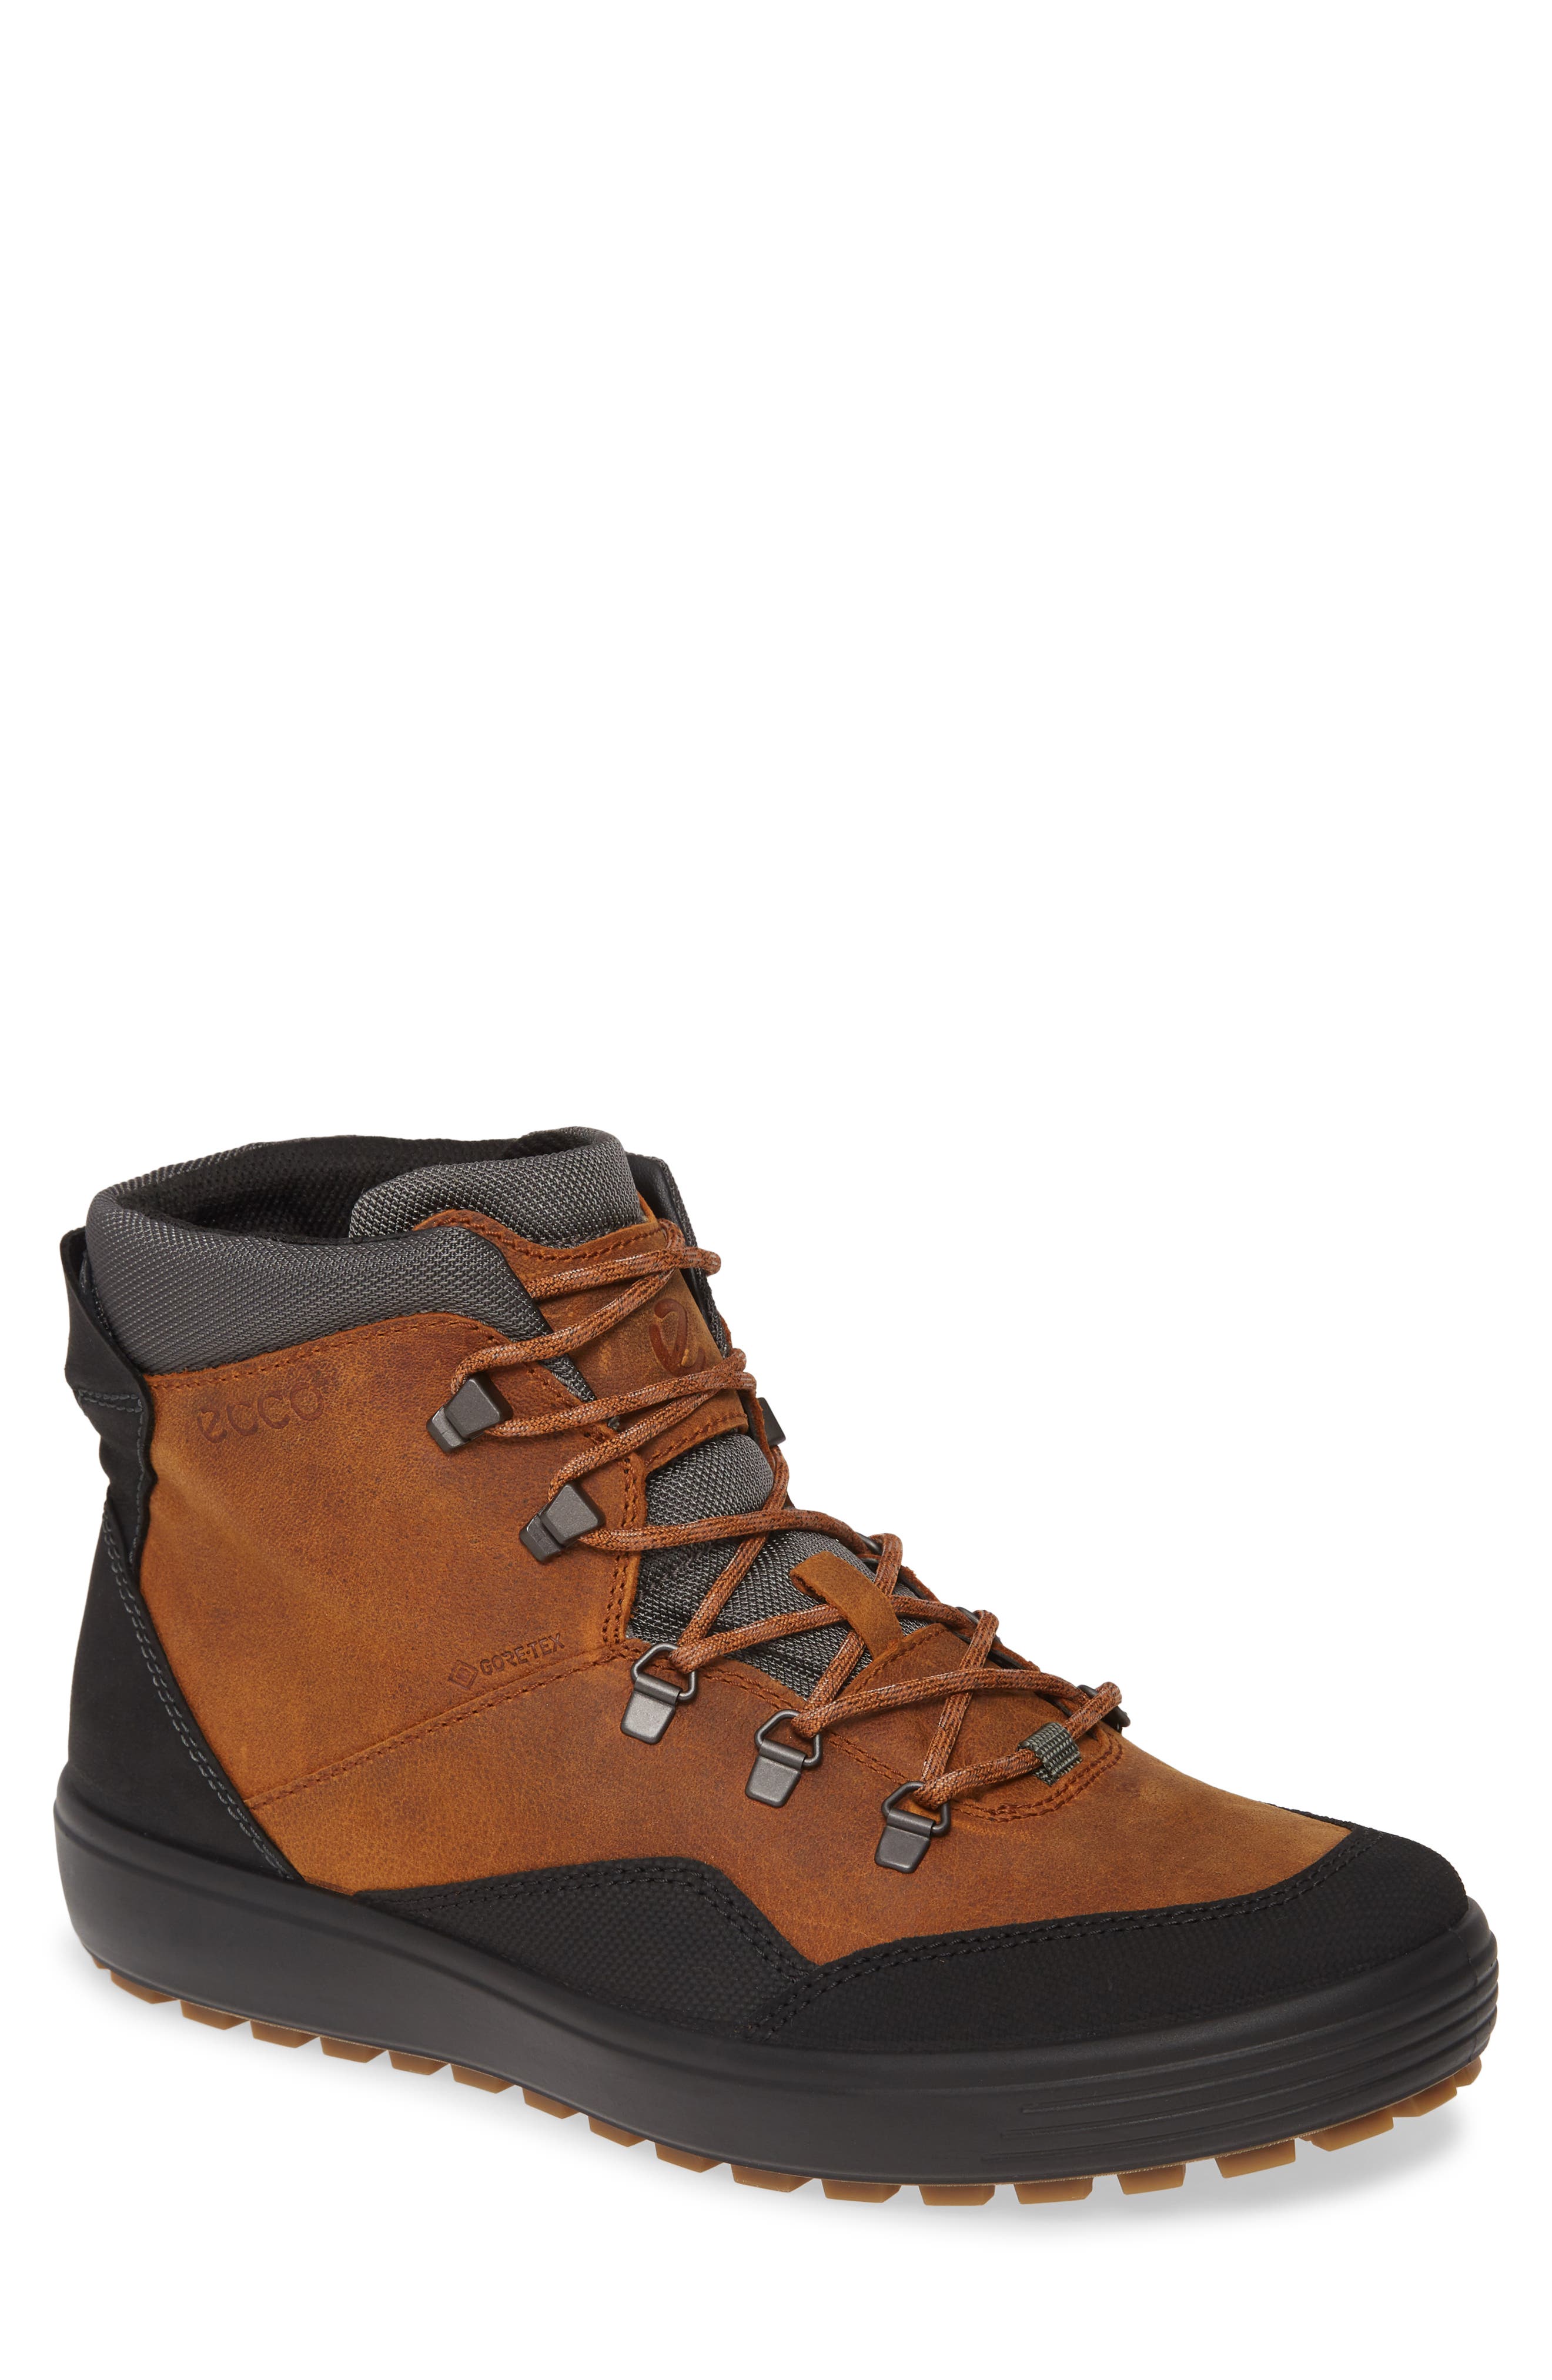 UPC 825840089912 product image for Men's Ecco Soft 7 Tred Terrain High Sneaker, Size 9-9.5US / 43EU - Brown | upcitemdb.com